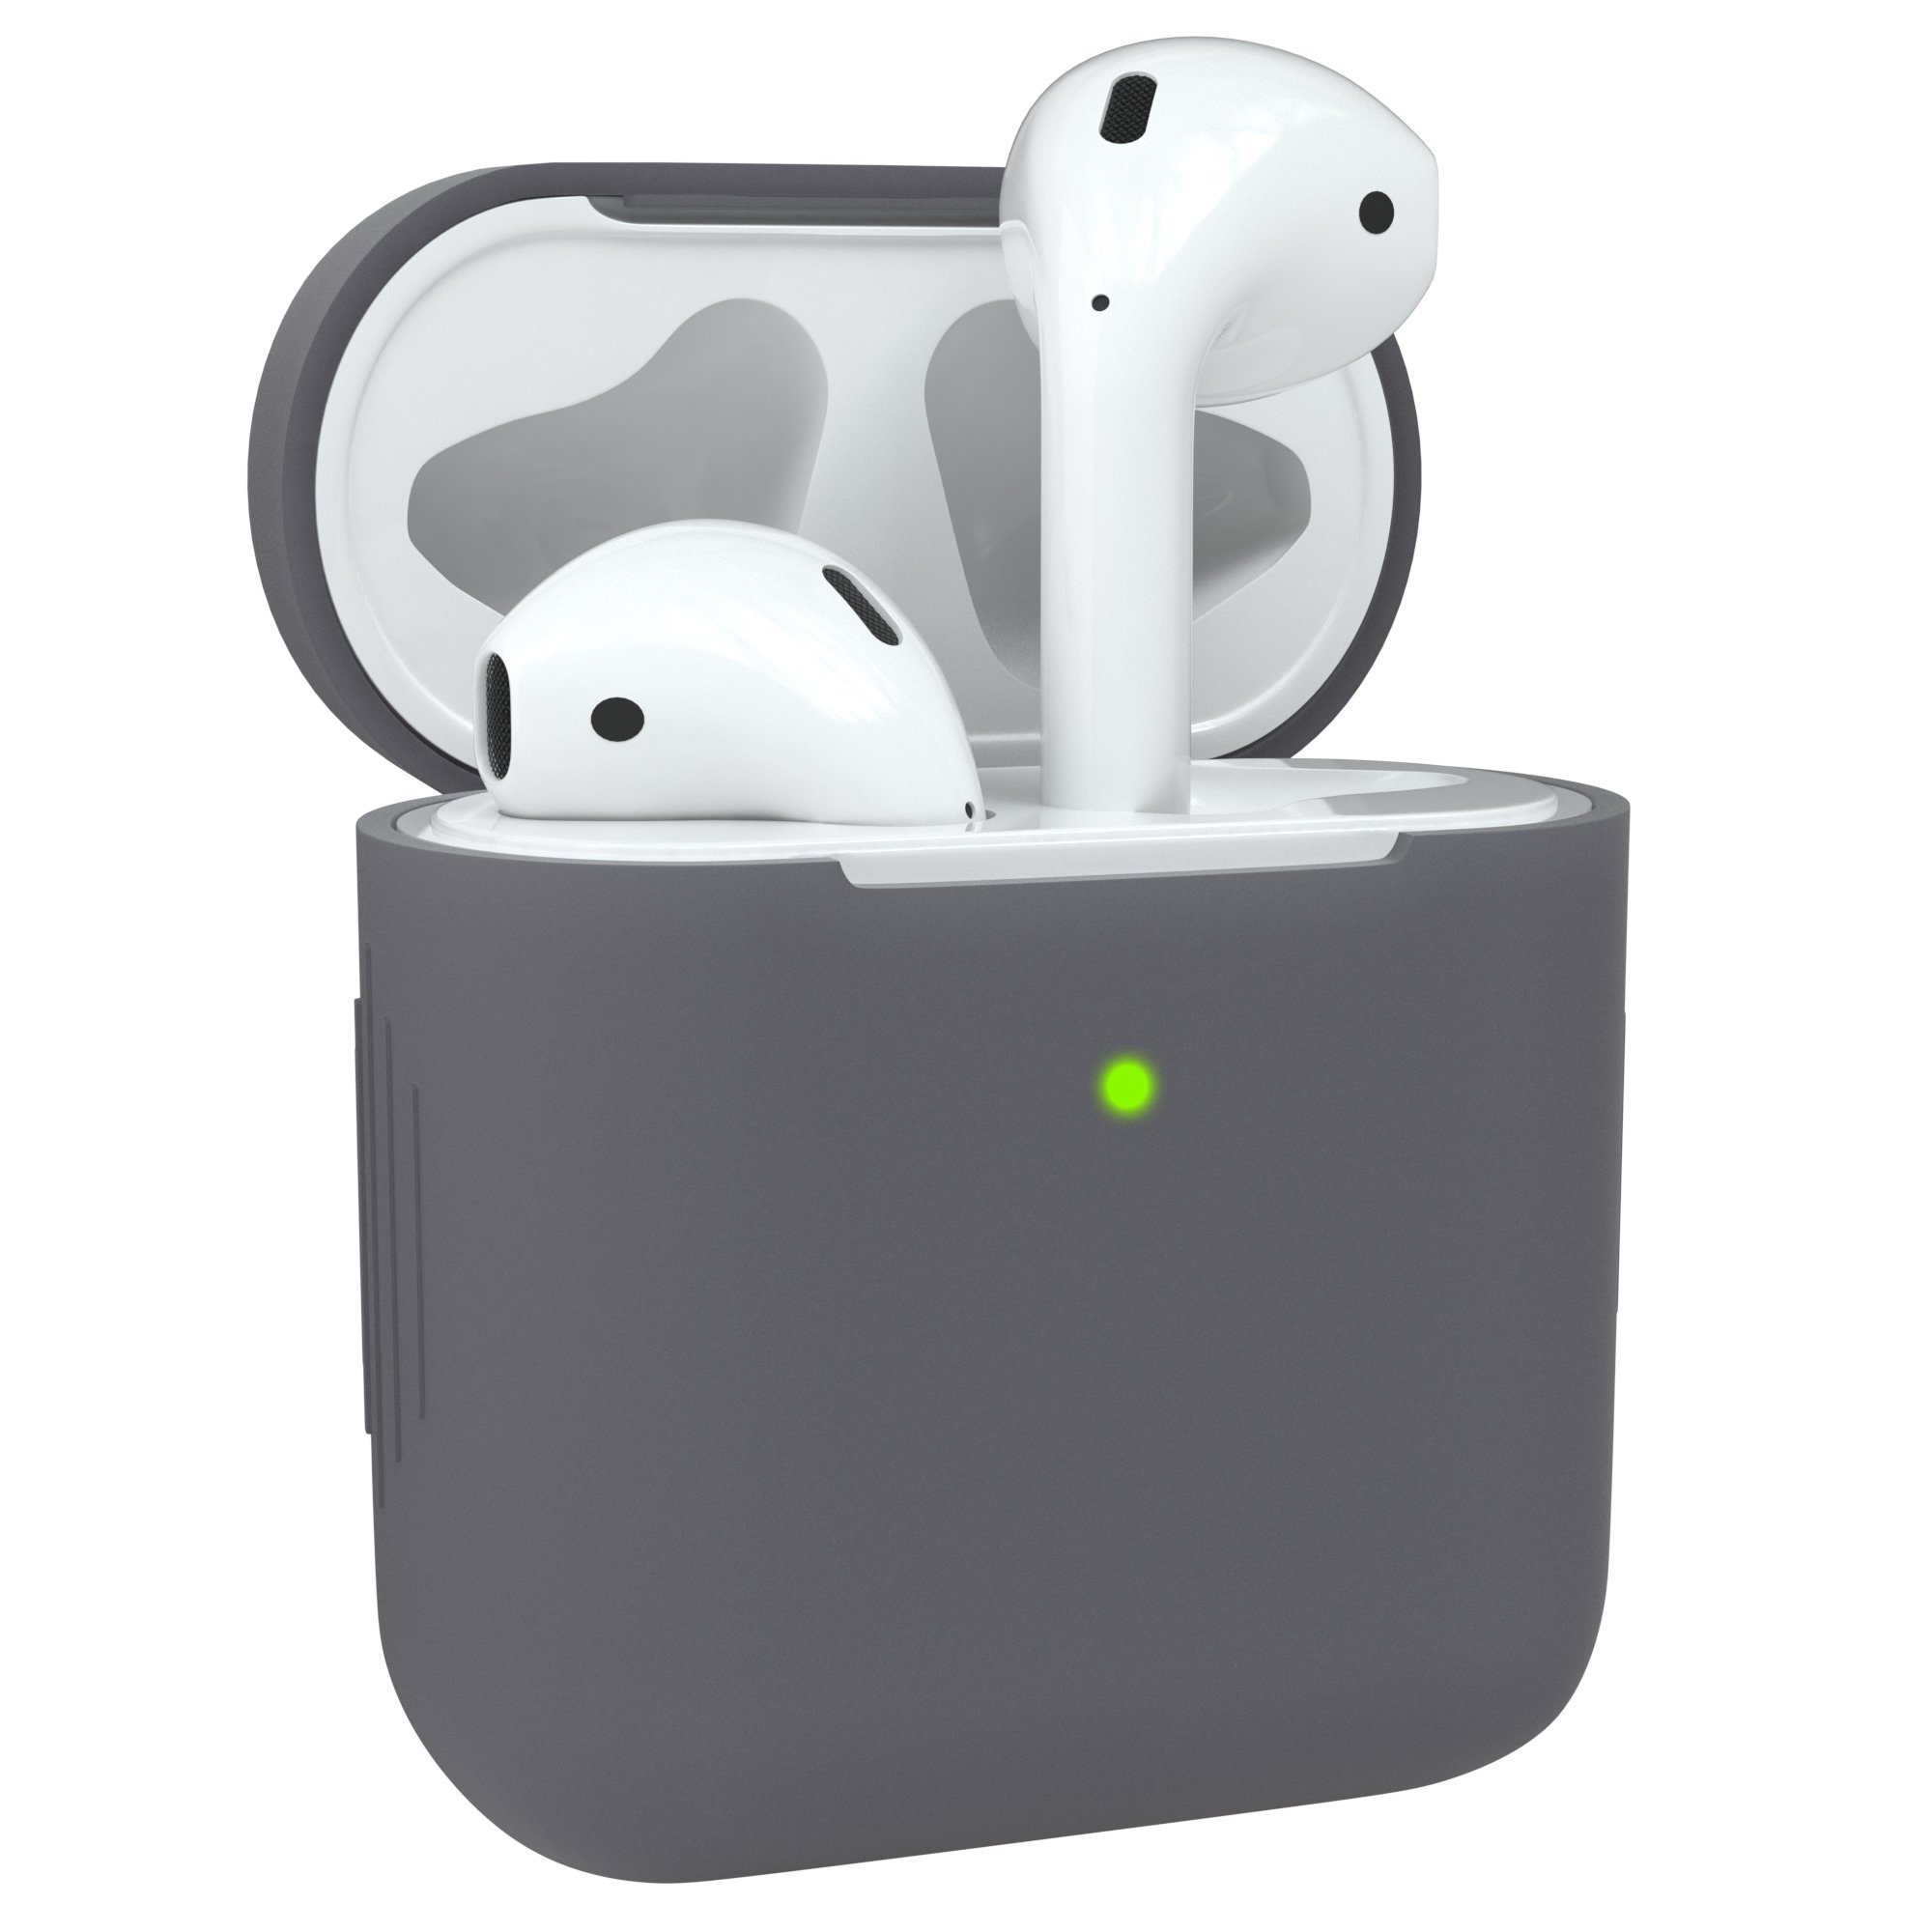 EAZY CASE Kopfhörer-Schutzhülle Silikon Hülle kompatibel mit Apple AirPods 1 & 2, Box Hülle Rutschfestes Etui Stoßfest Schutzhülle Cover Anthrazit Grau